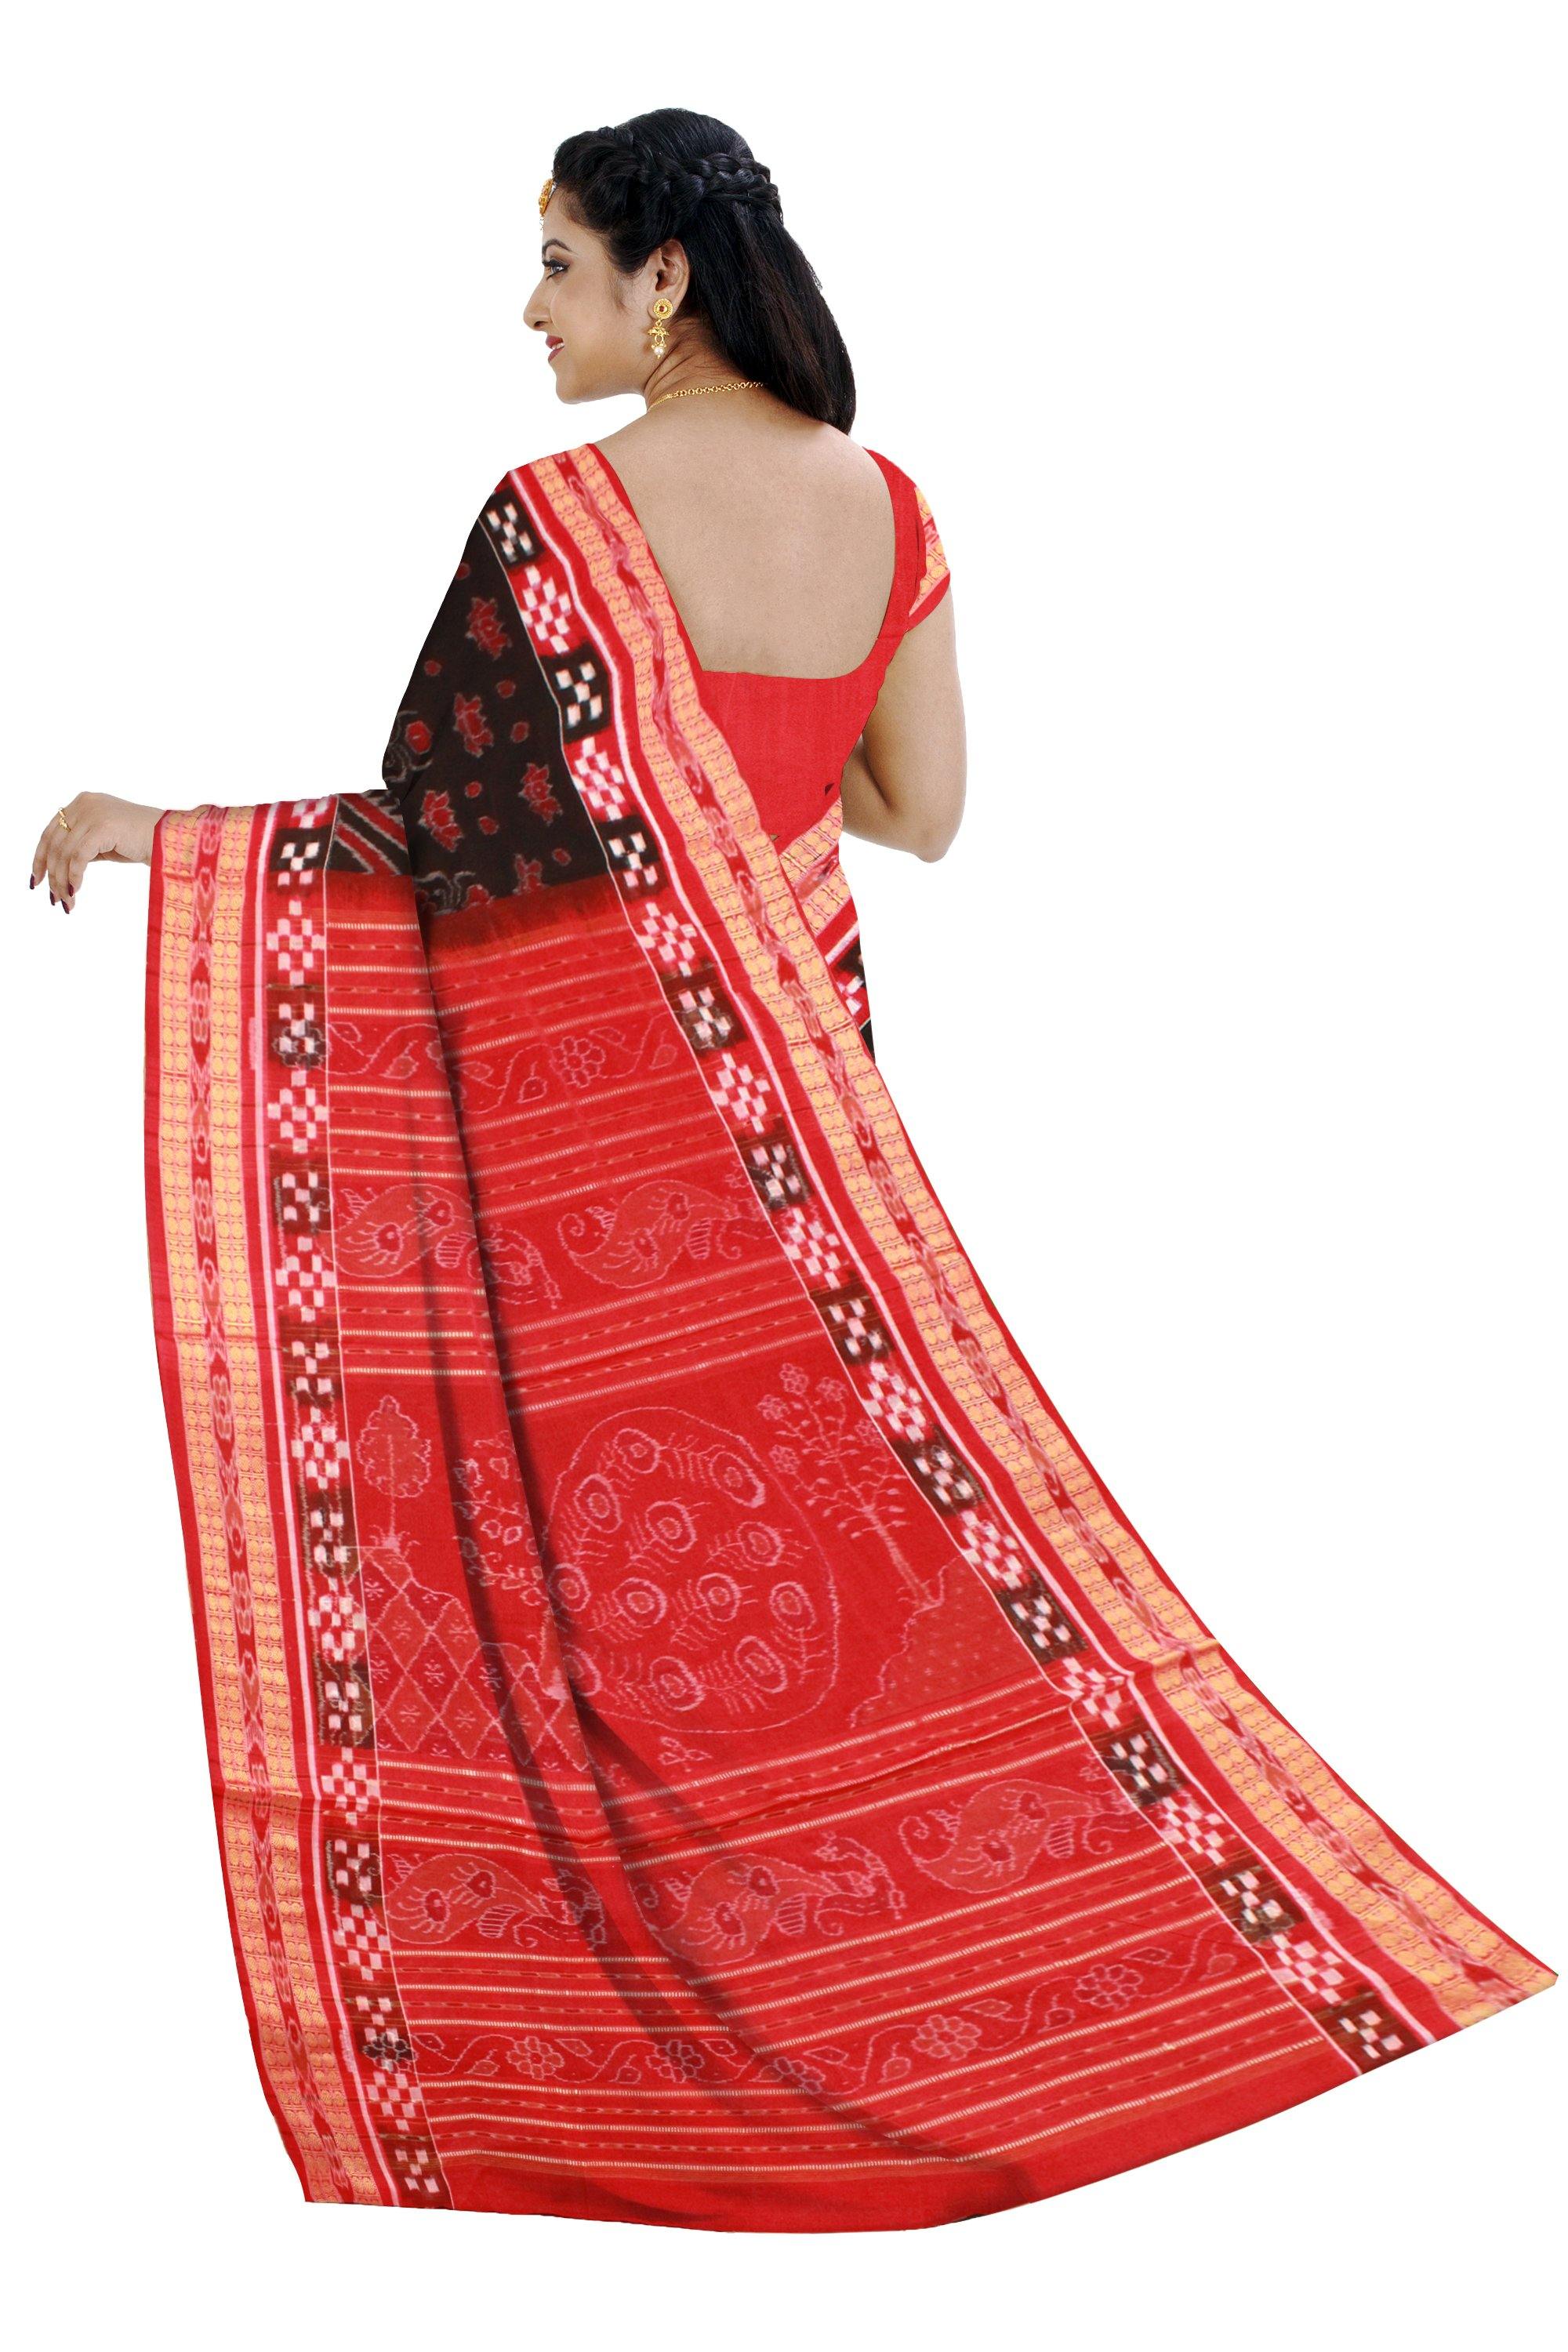 Sambalpuri cotton Ikat saree in blown color and Pasapali border. Available with blouse piece. - Koshali Arts & Crafts Enterprise